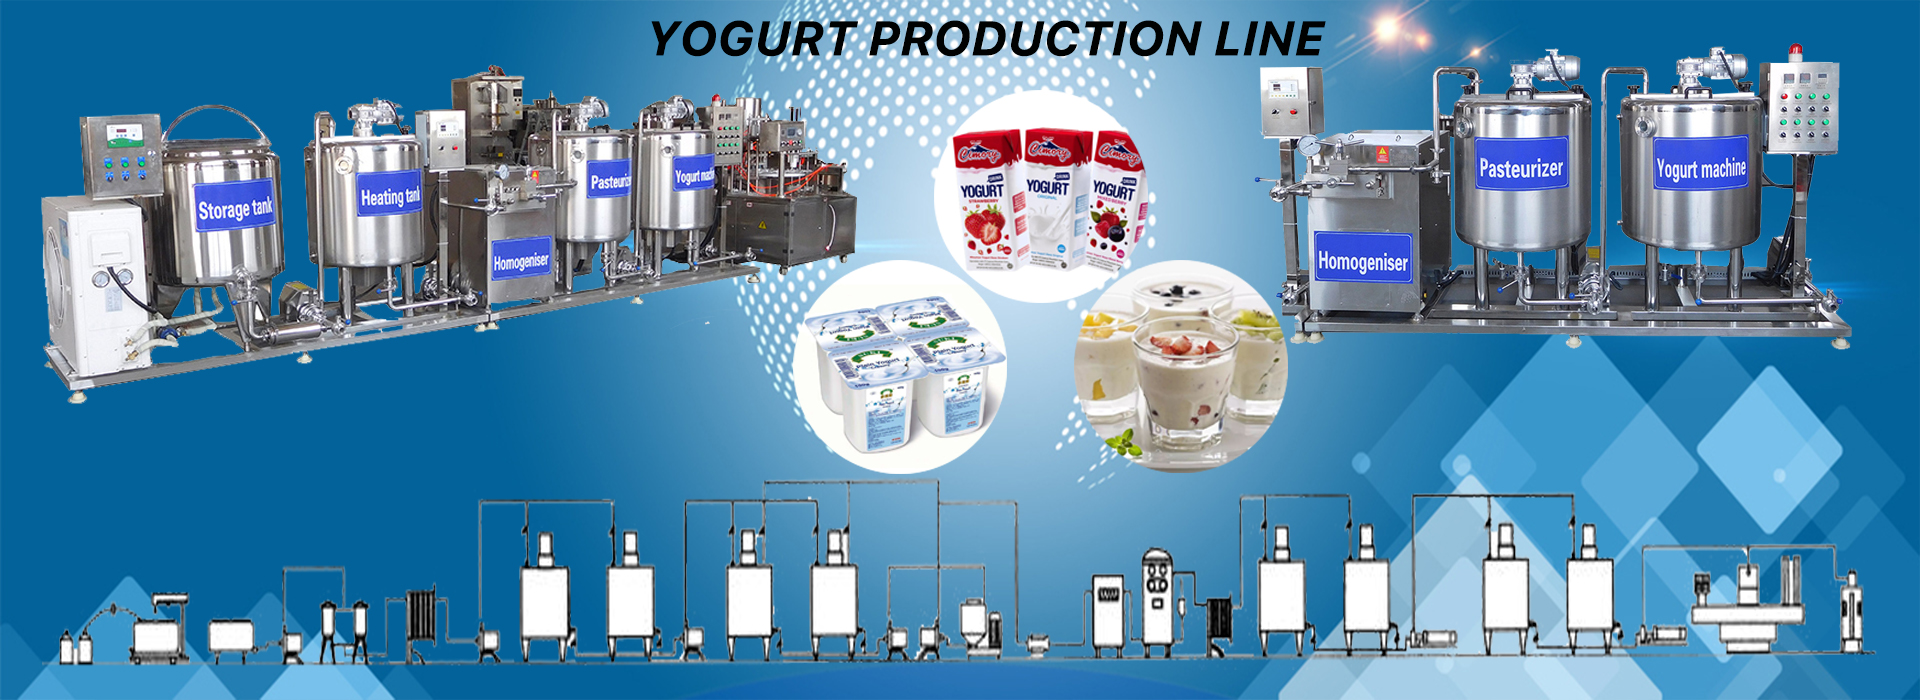 YOGURT PRODUCTION LINE